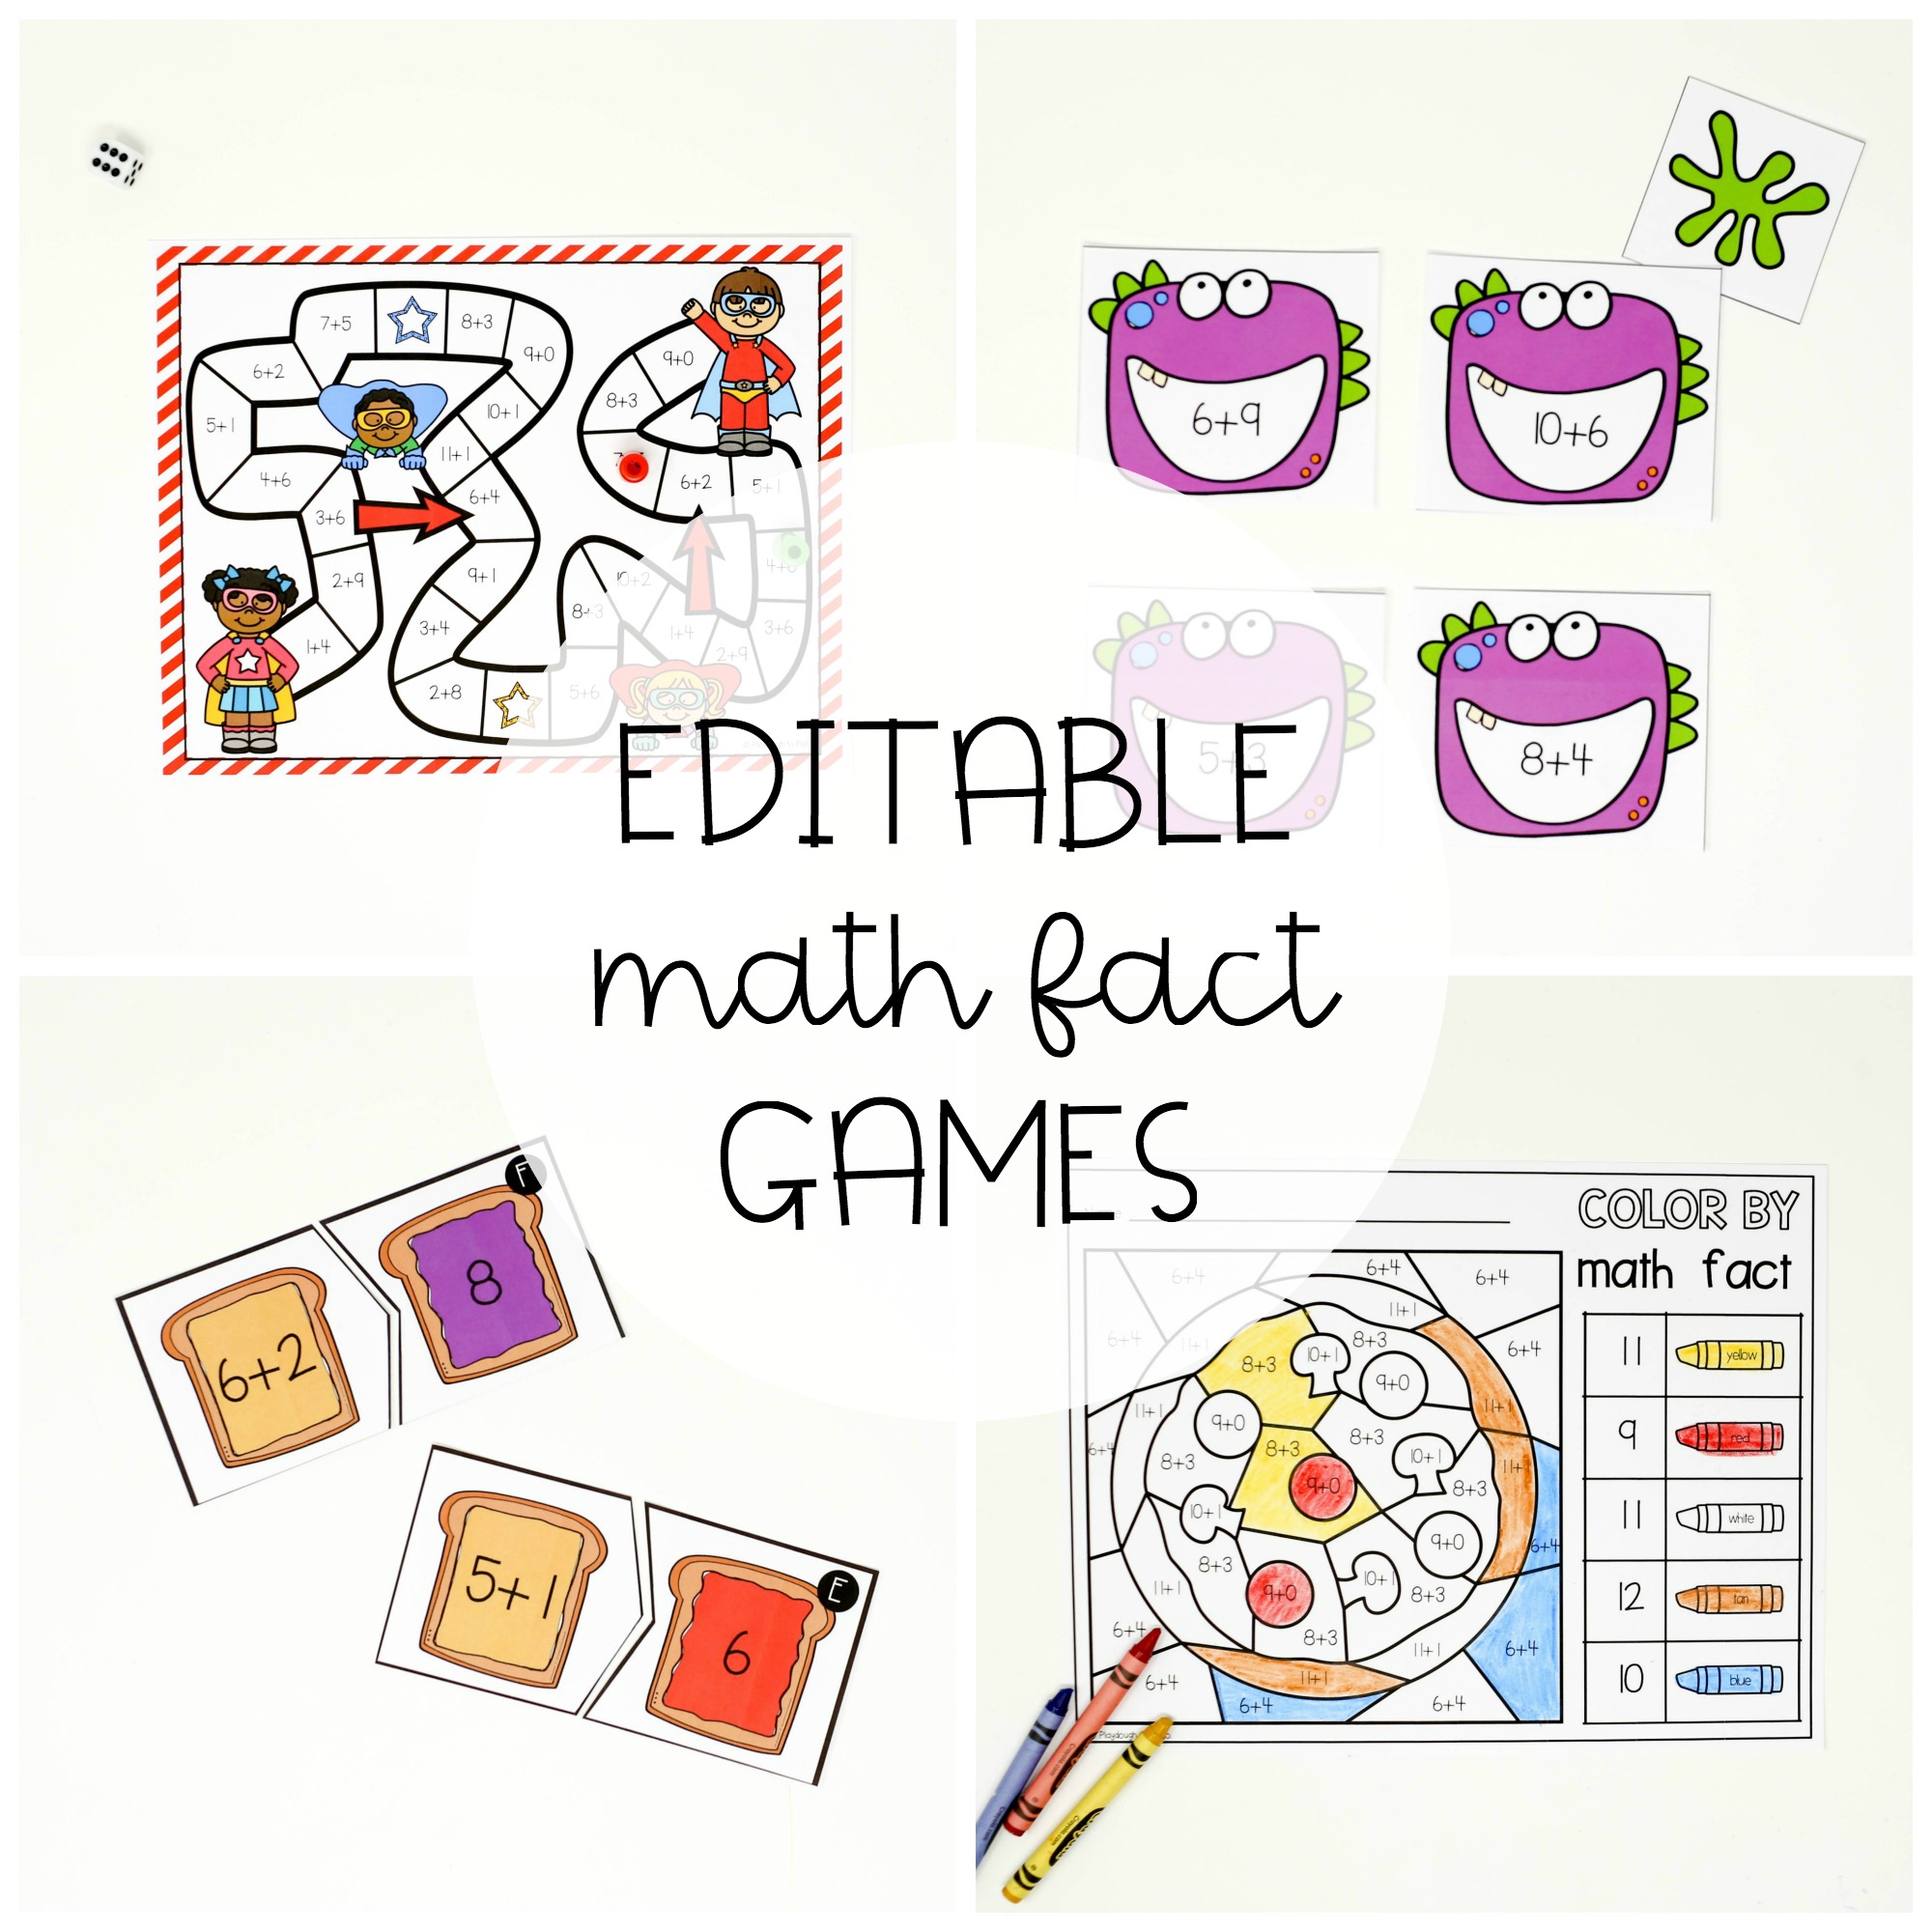 15 EDITABLE Math Fact Games